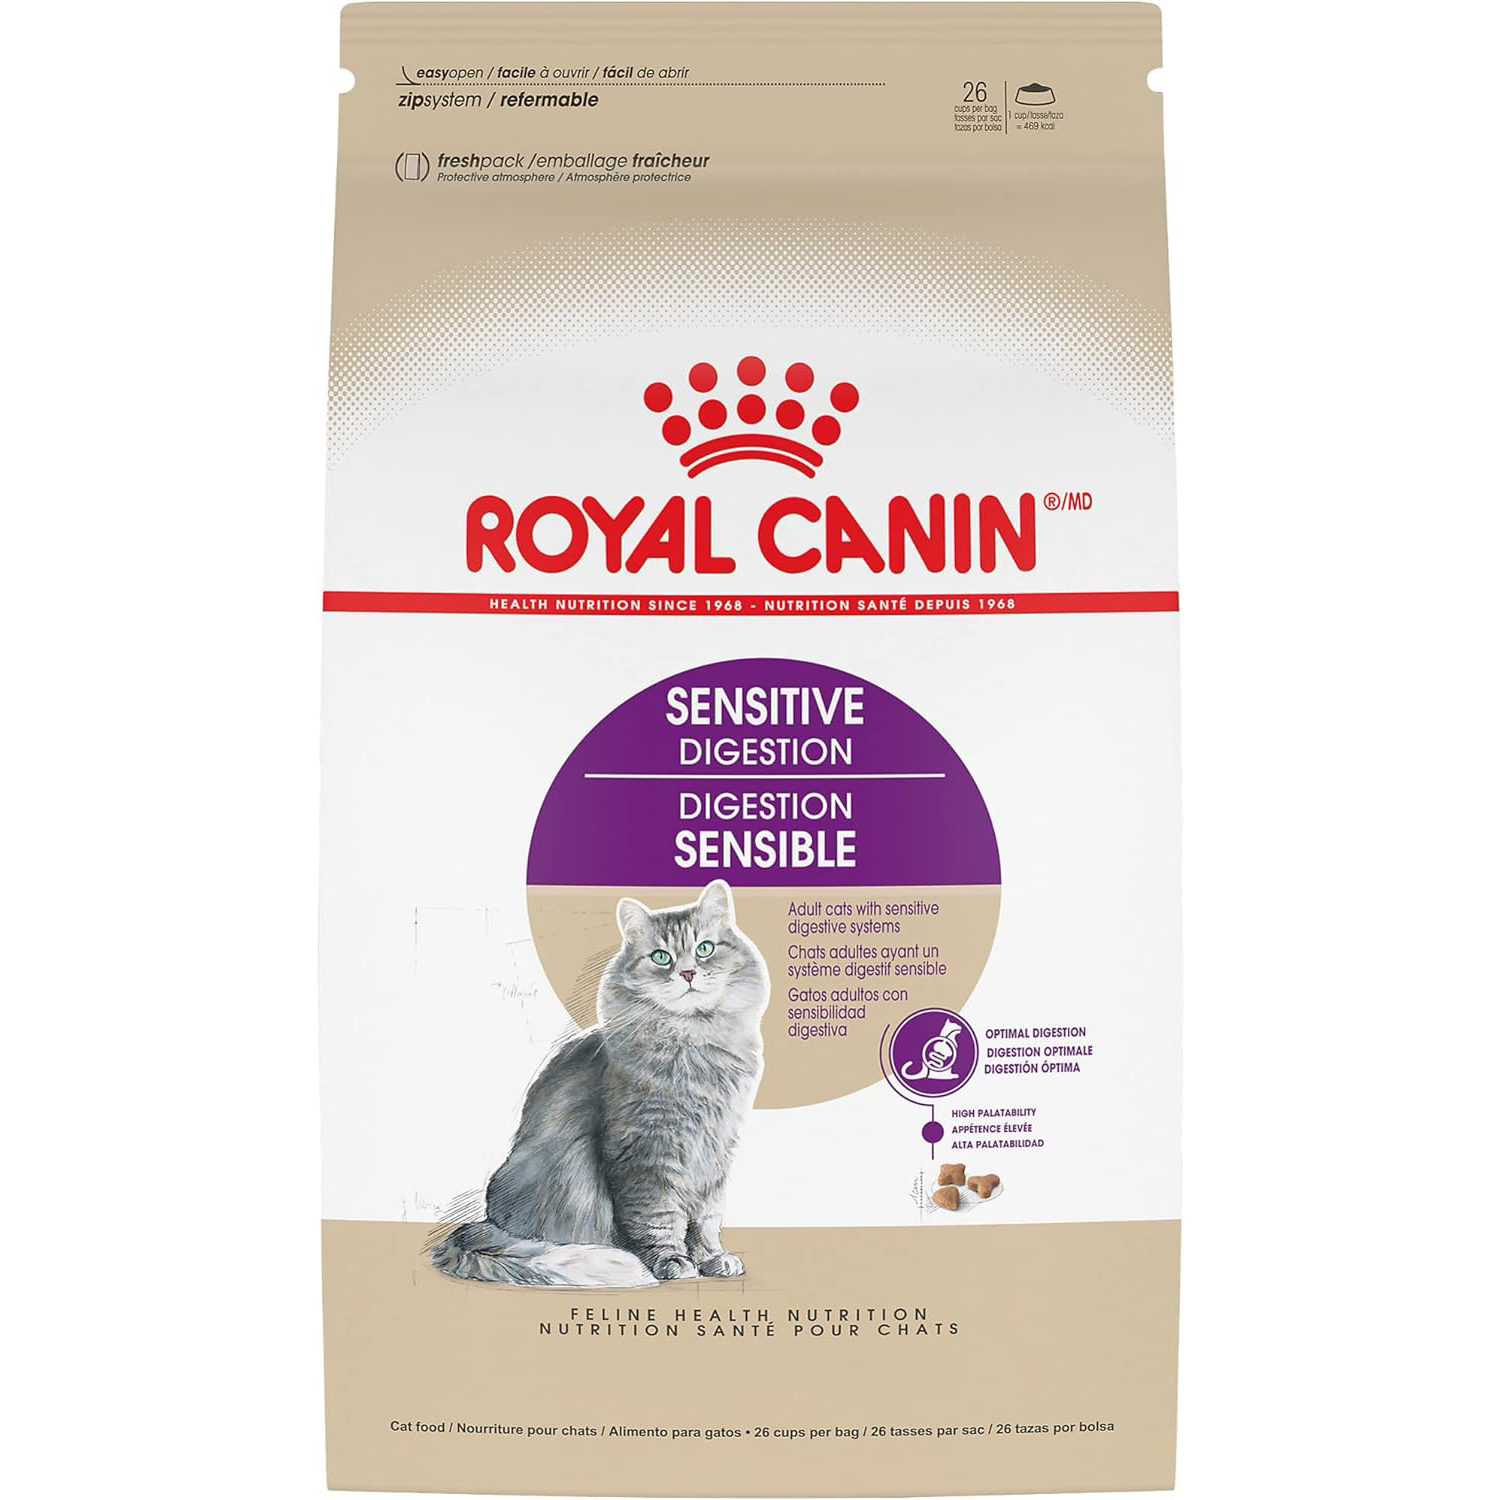 Royal Canin Feline Health Nutrition Sensitive Digestion Cat Food Dry Formula, Balanced Nutrition to Support Digestive Health, 7 lb Bag